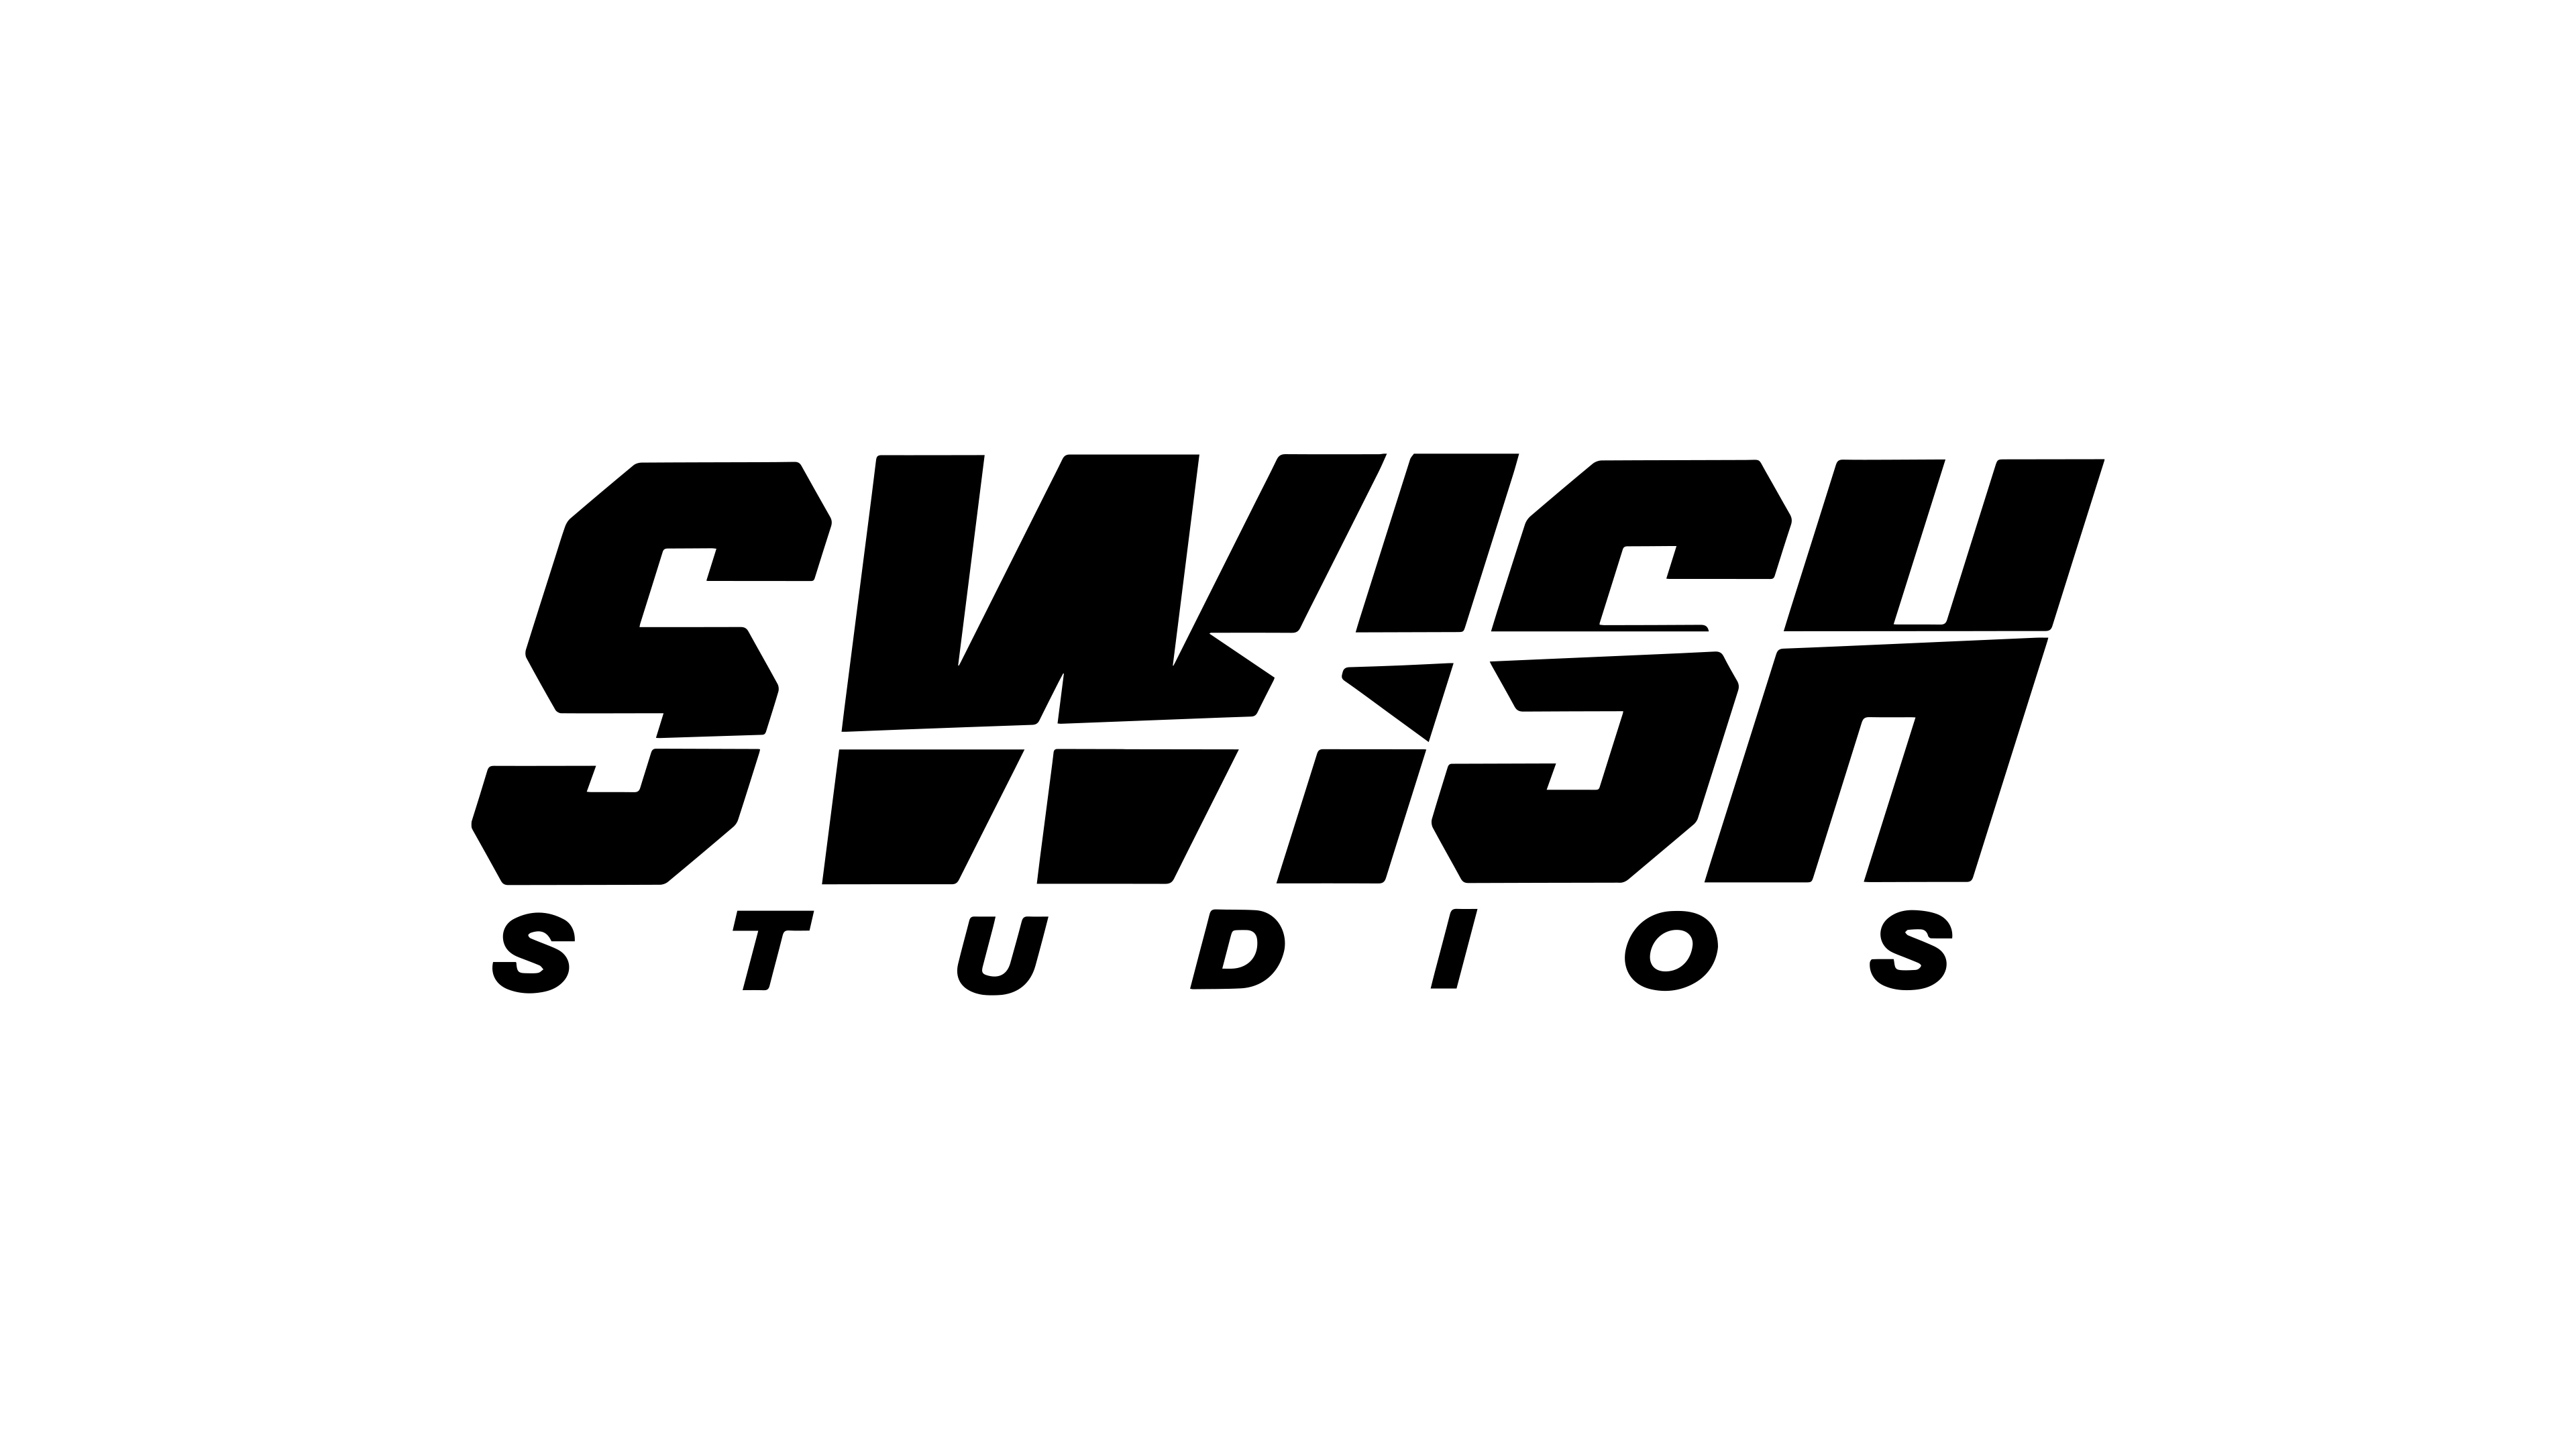 Swish Studios